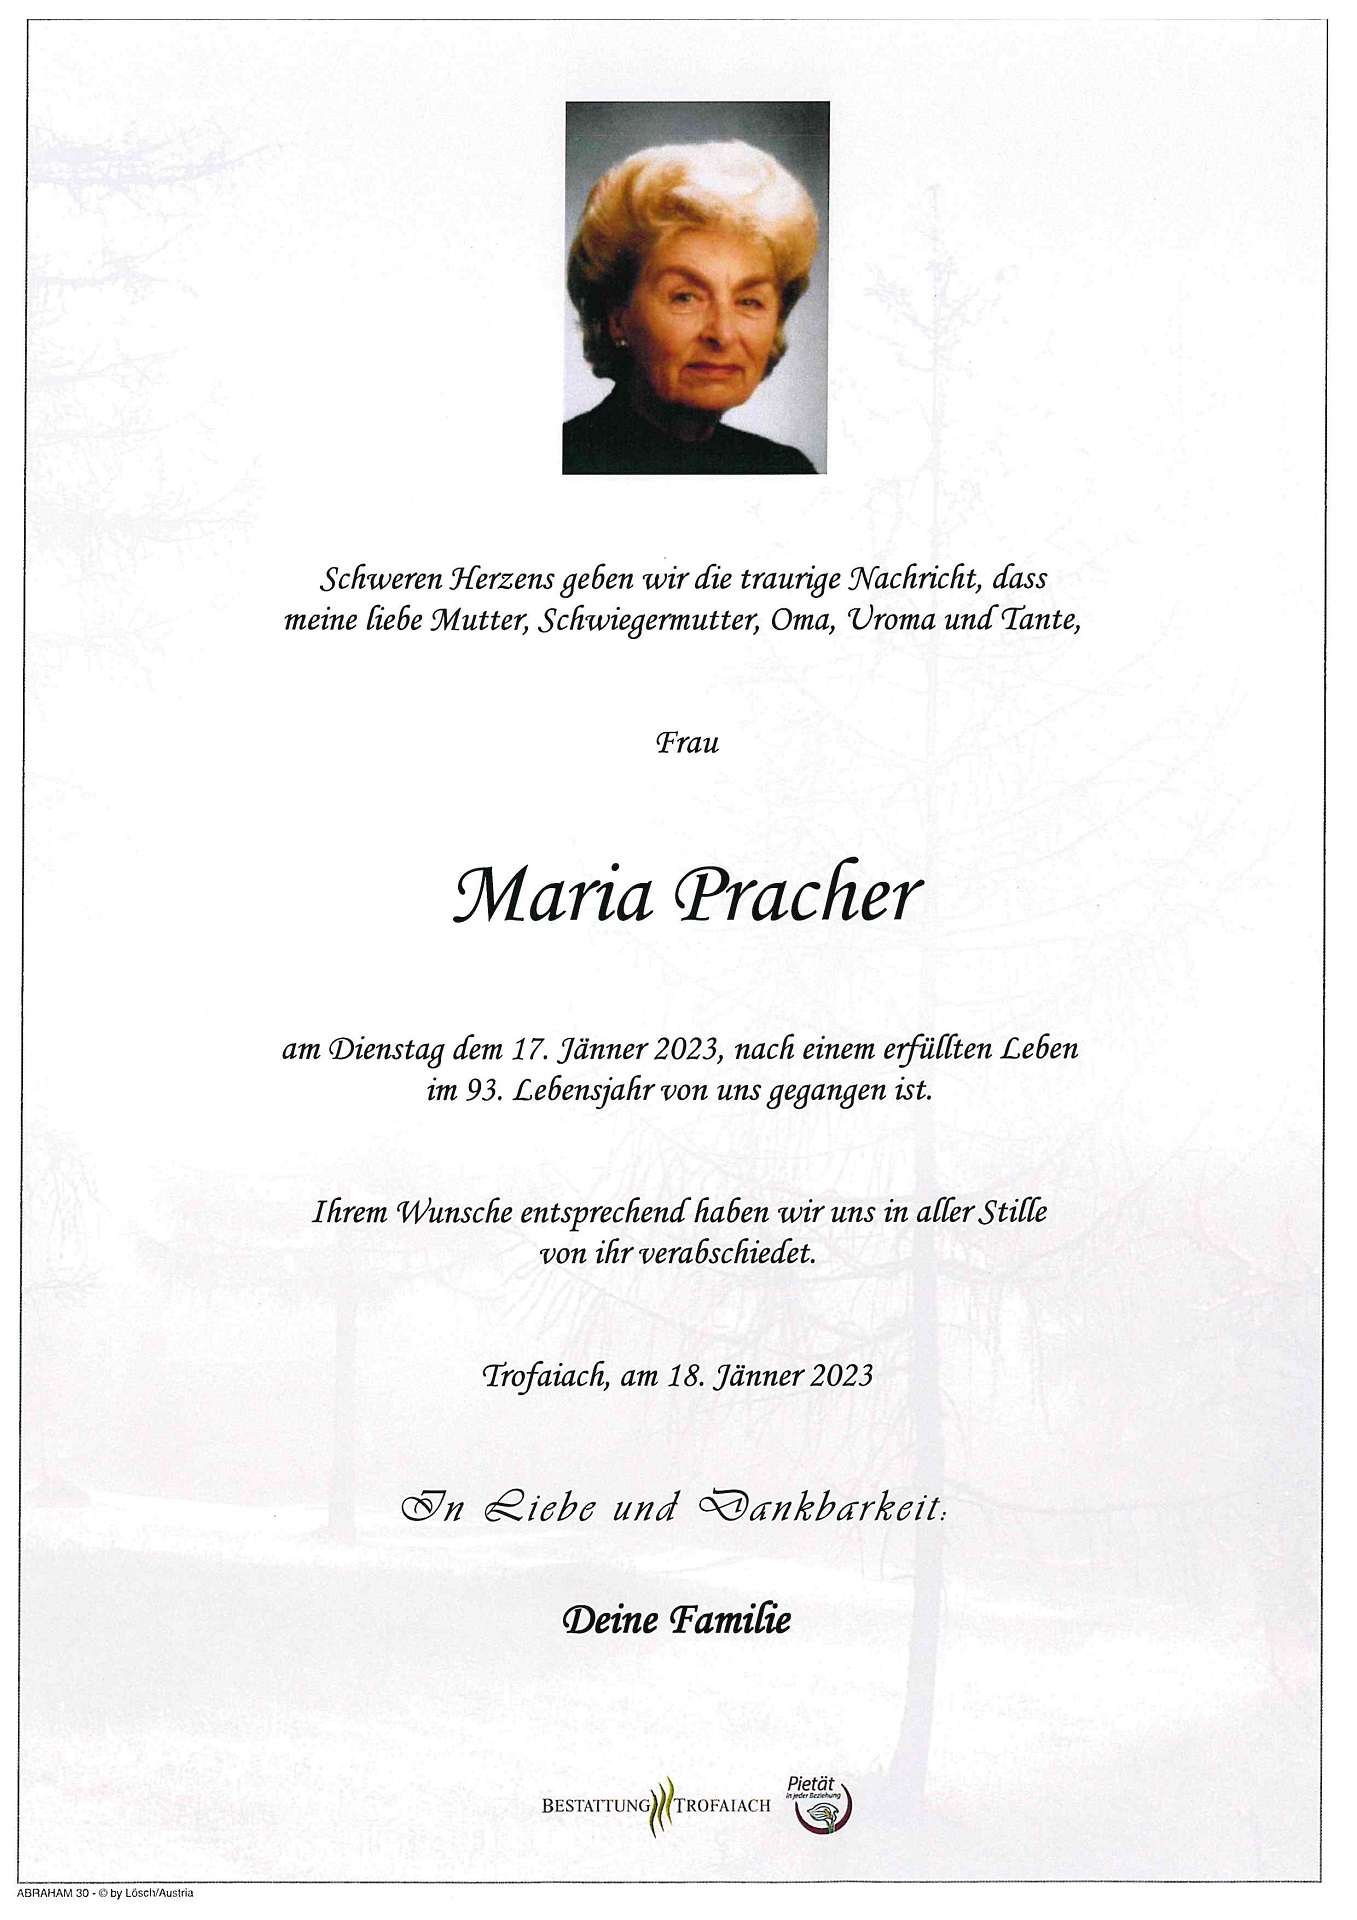 Pracher Maria